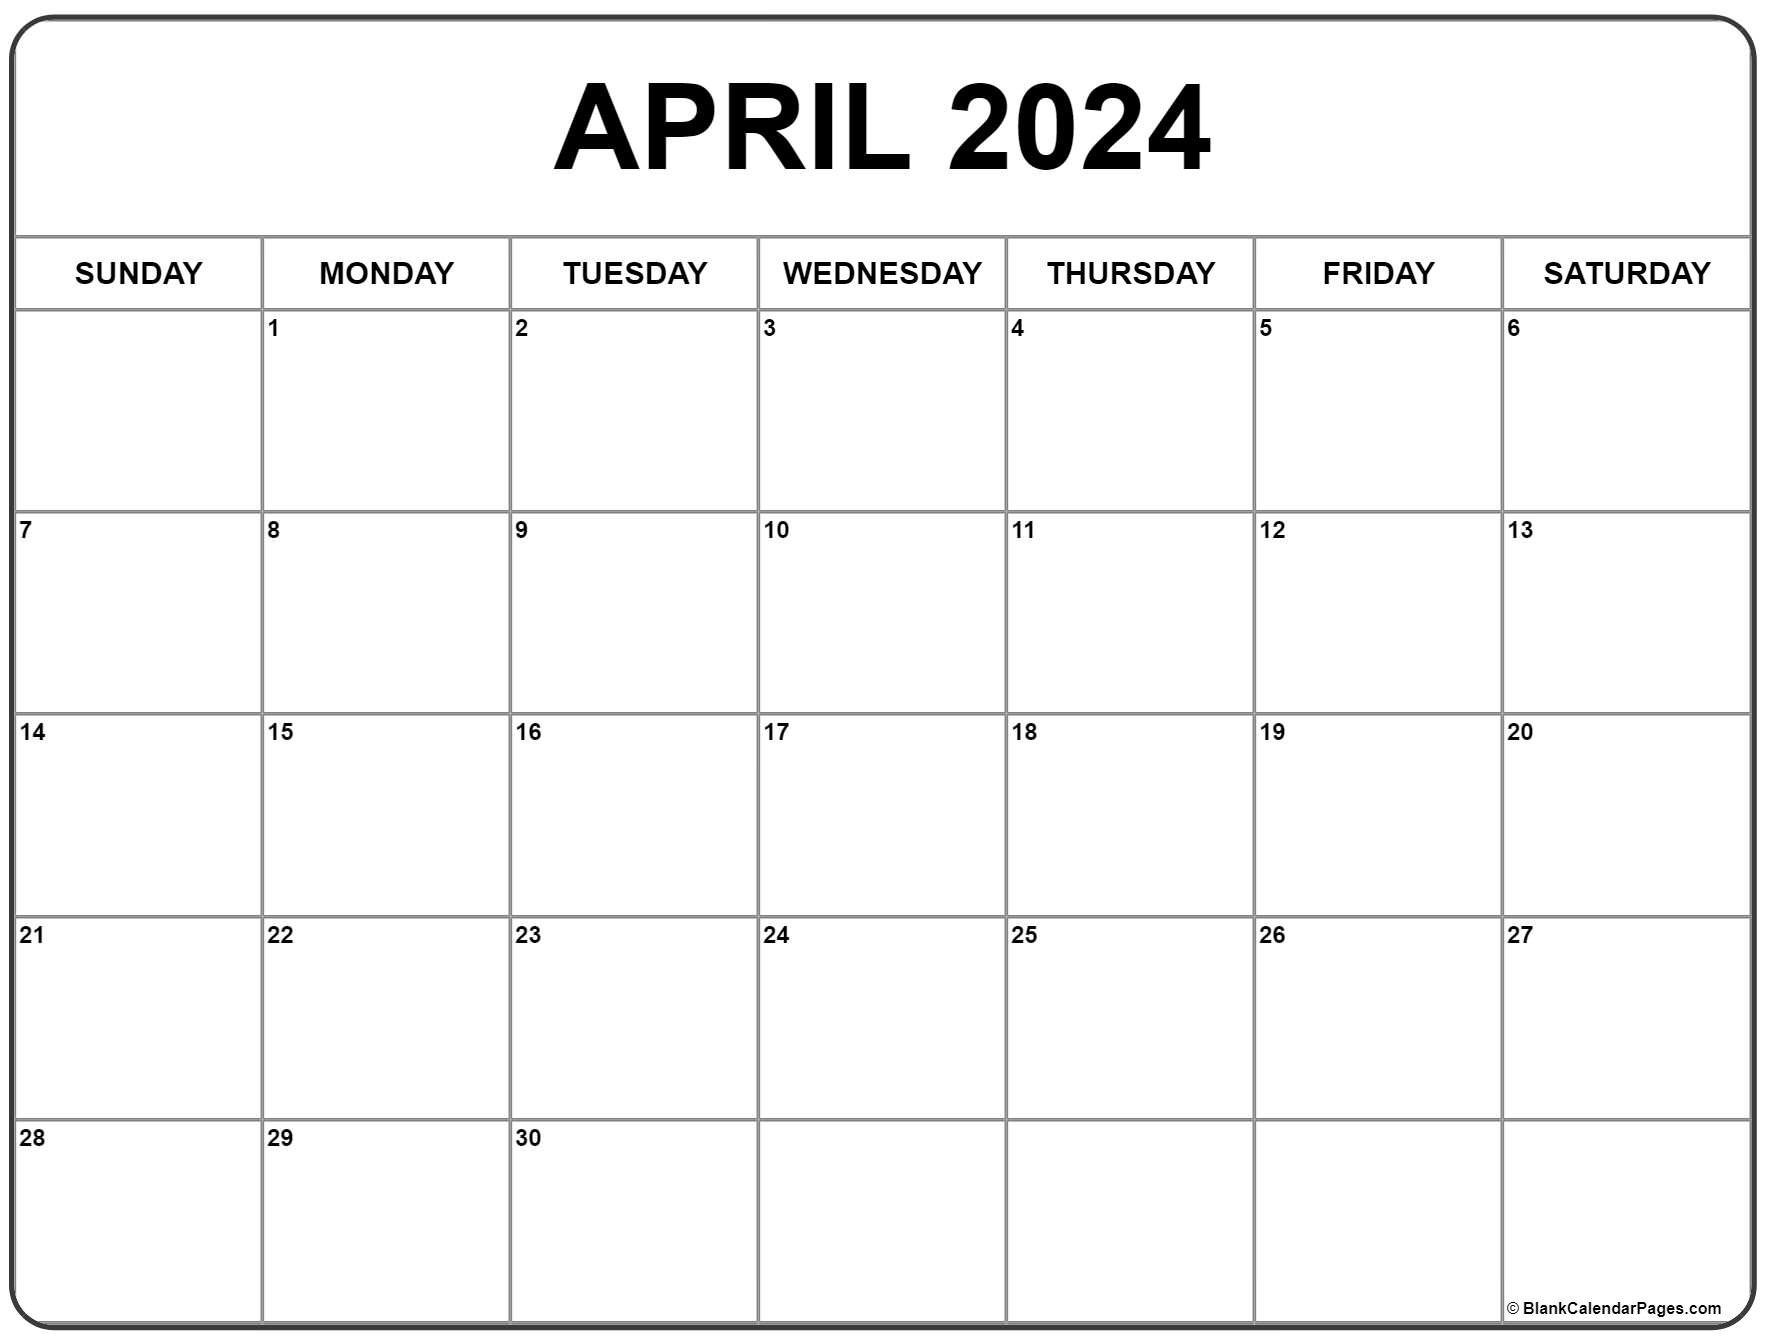 April 2024 Calendar | Free Printable Calendar for Printable Calendar 2024 April And May